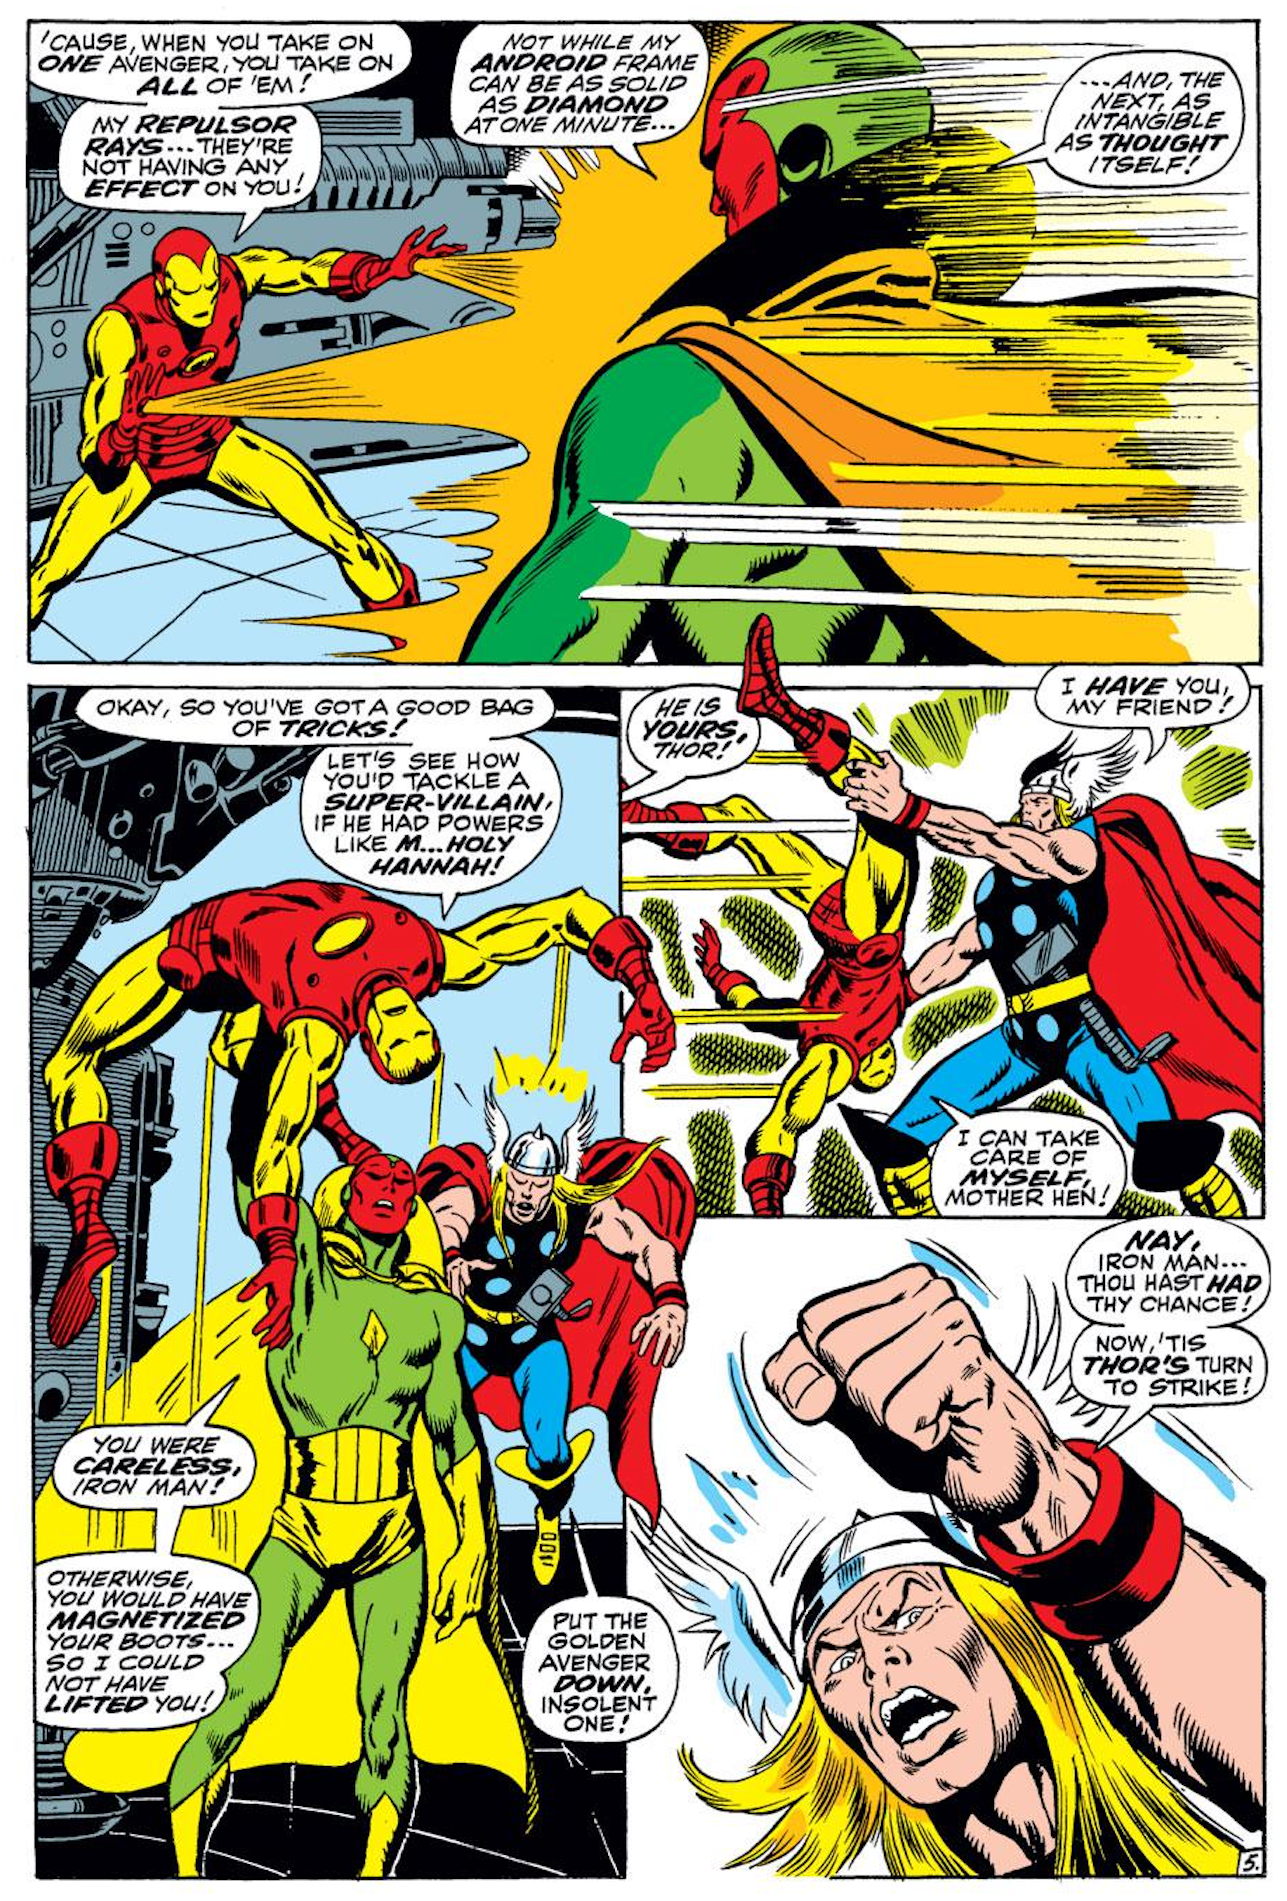 Iron Man vs Vision: Who’d Win a Comics Battle